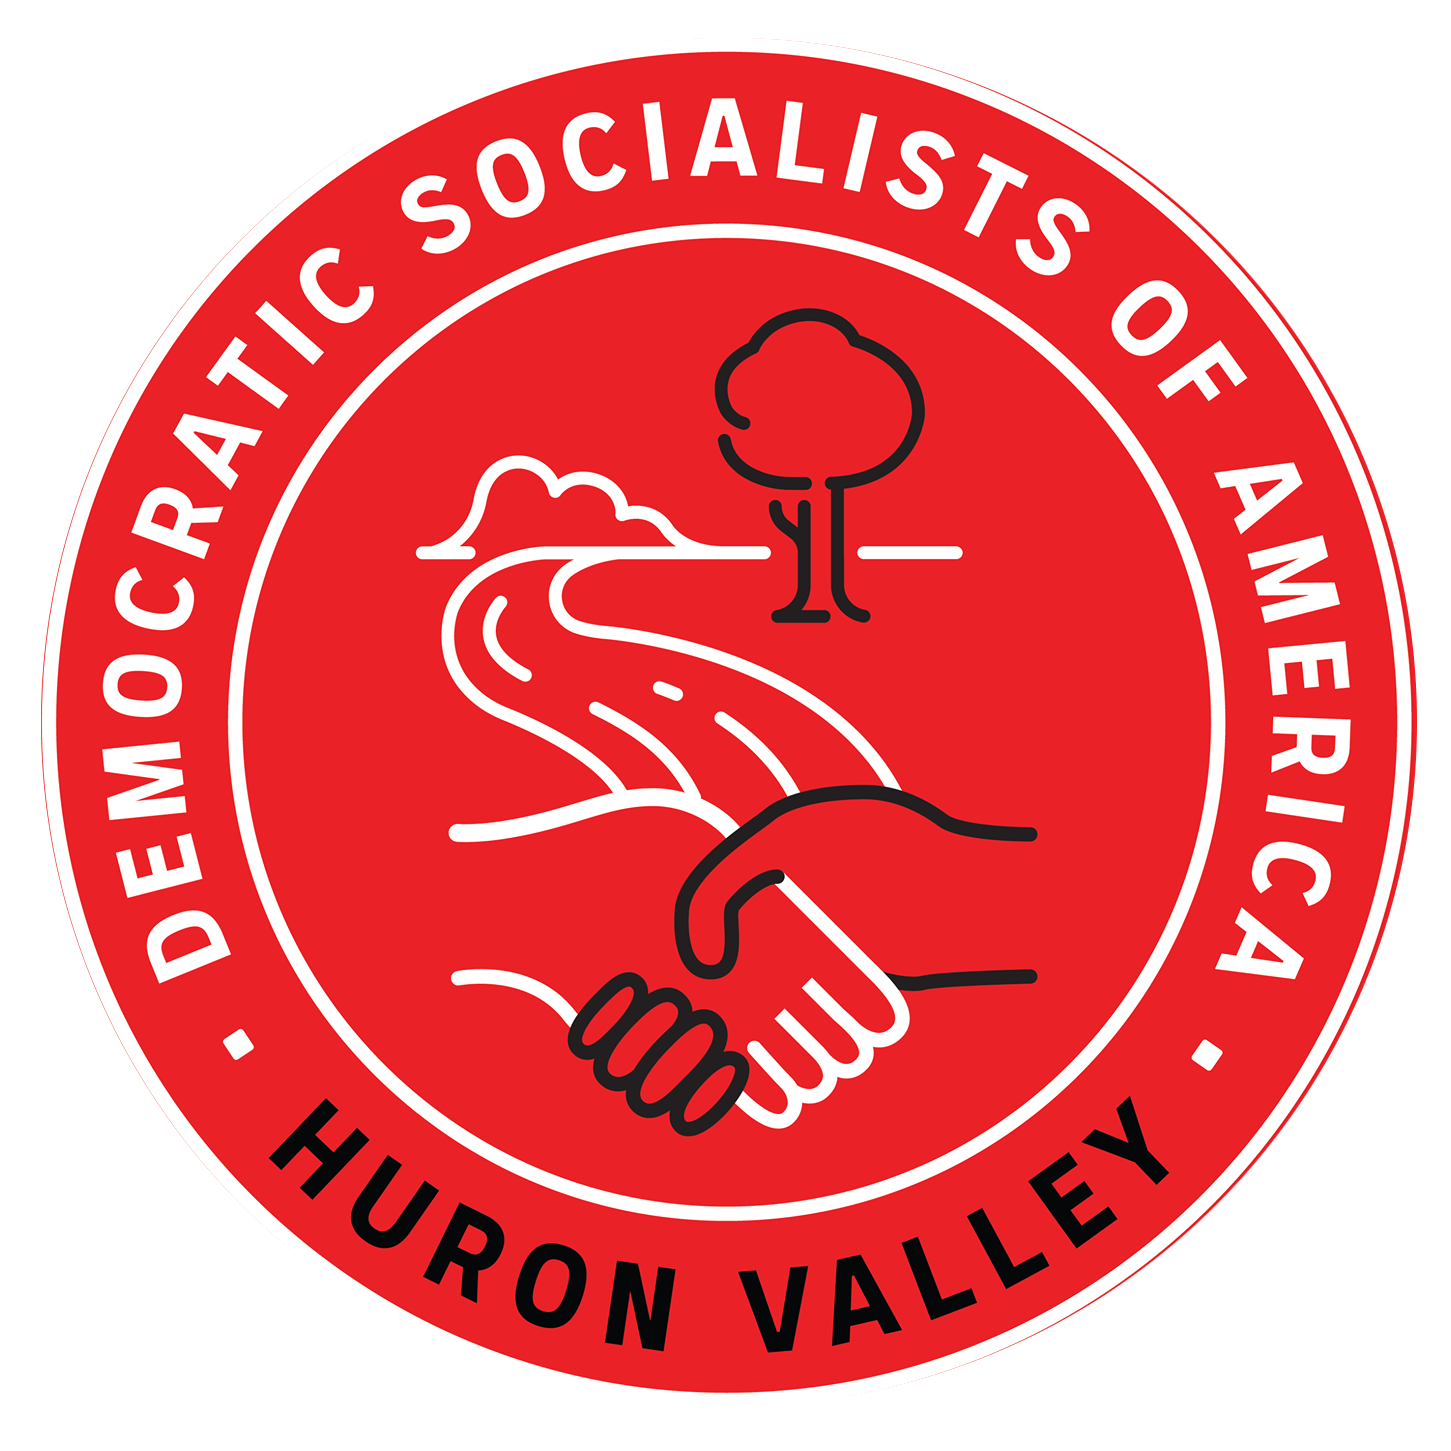 Huron Valley DSA Logo